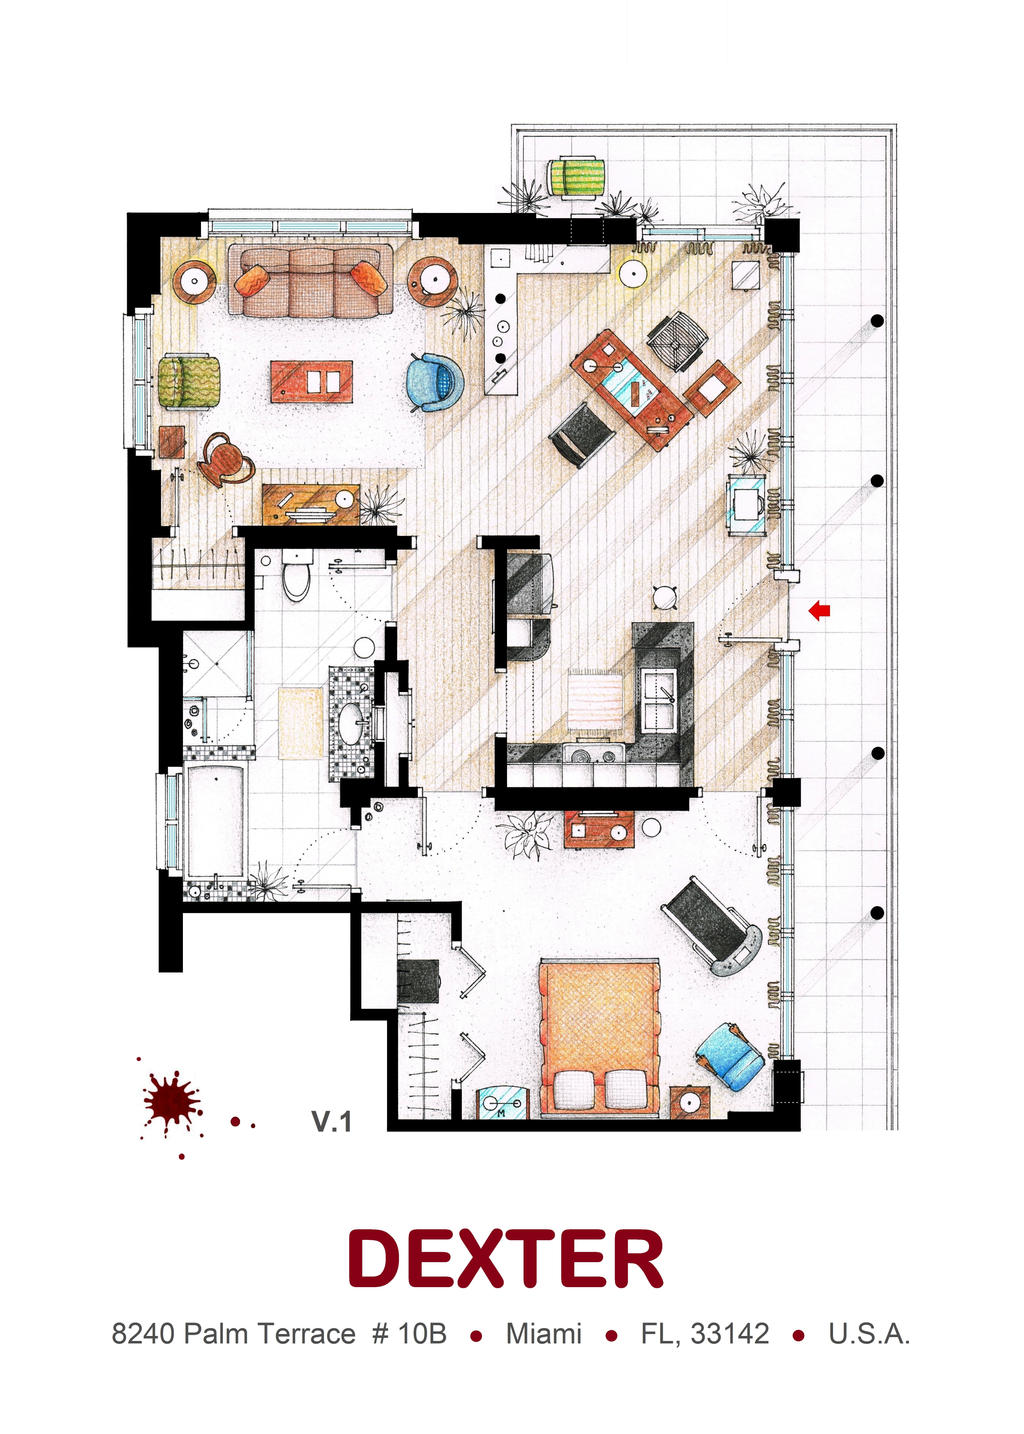 Floorplan of Dexter Morgan's Apartment v.1